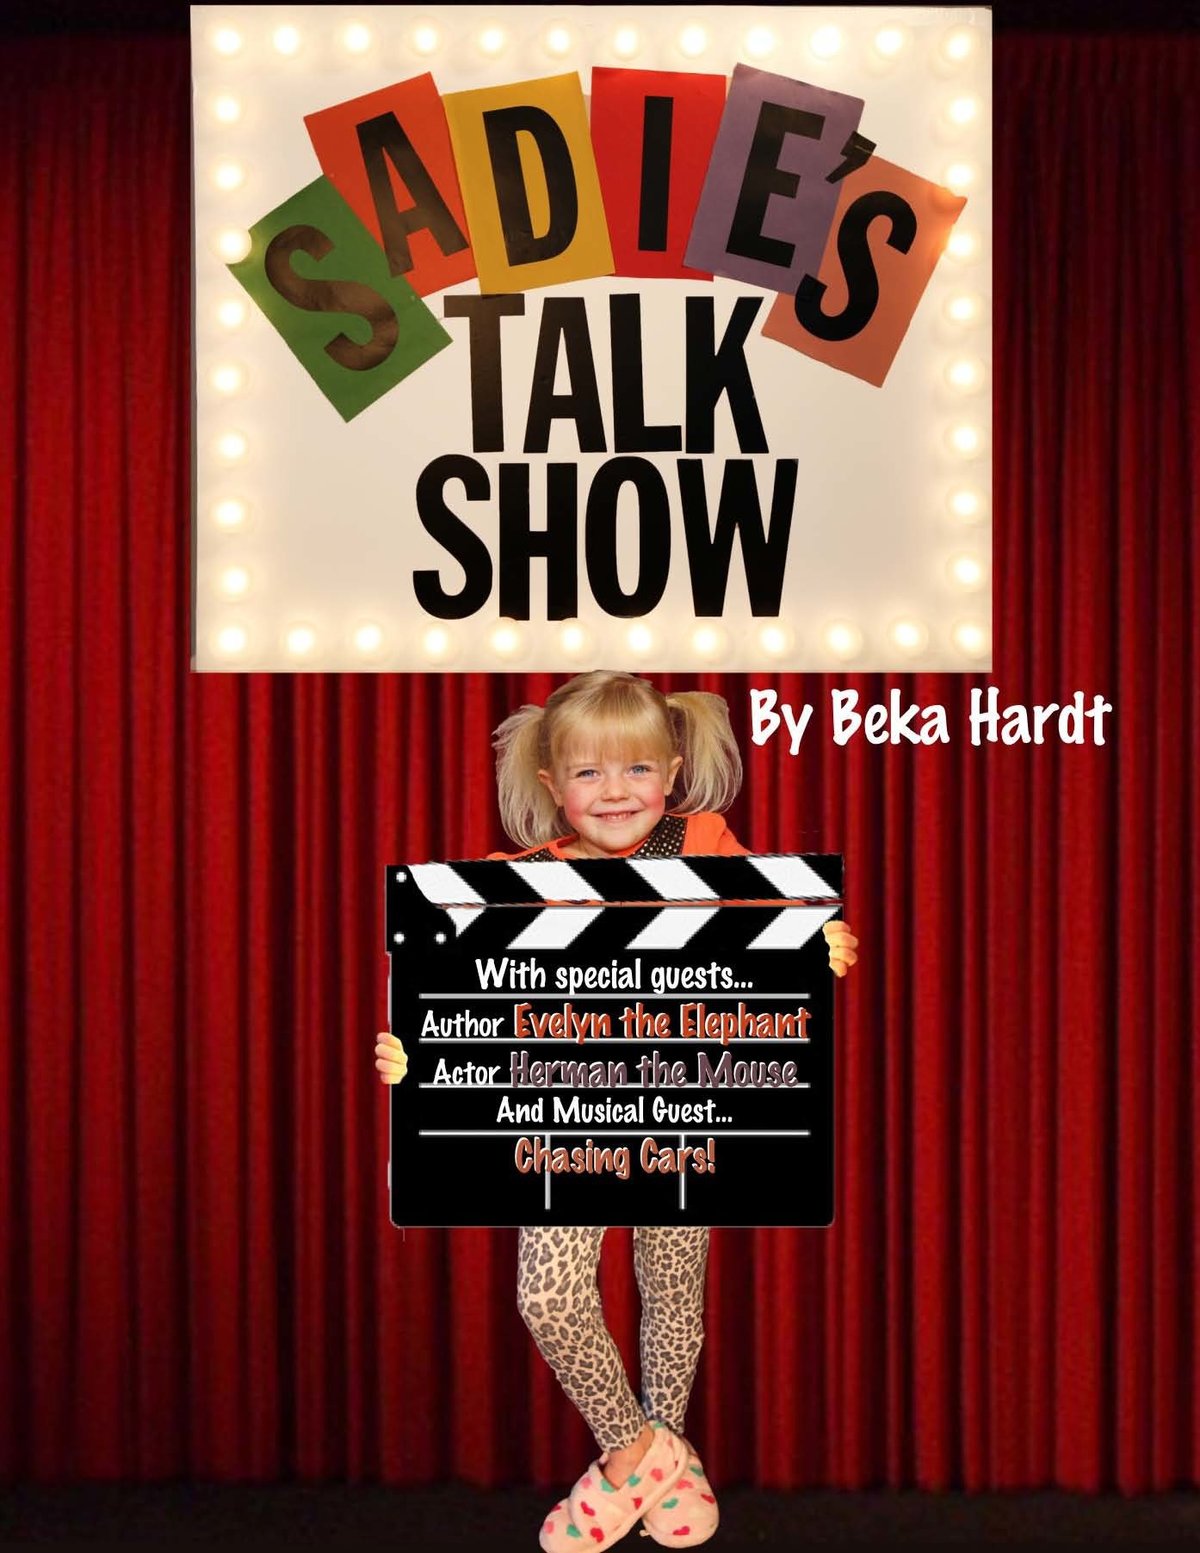 Sadie's Talk Show | Beka Hardt